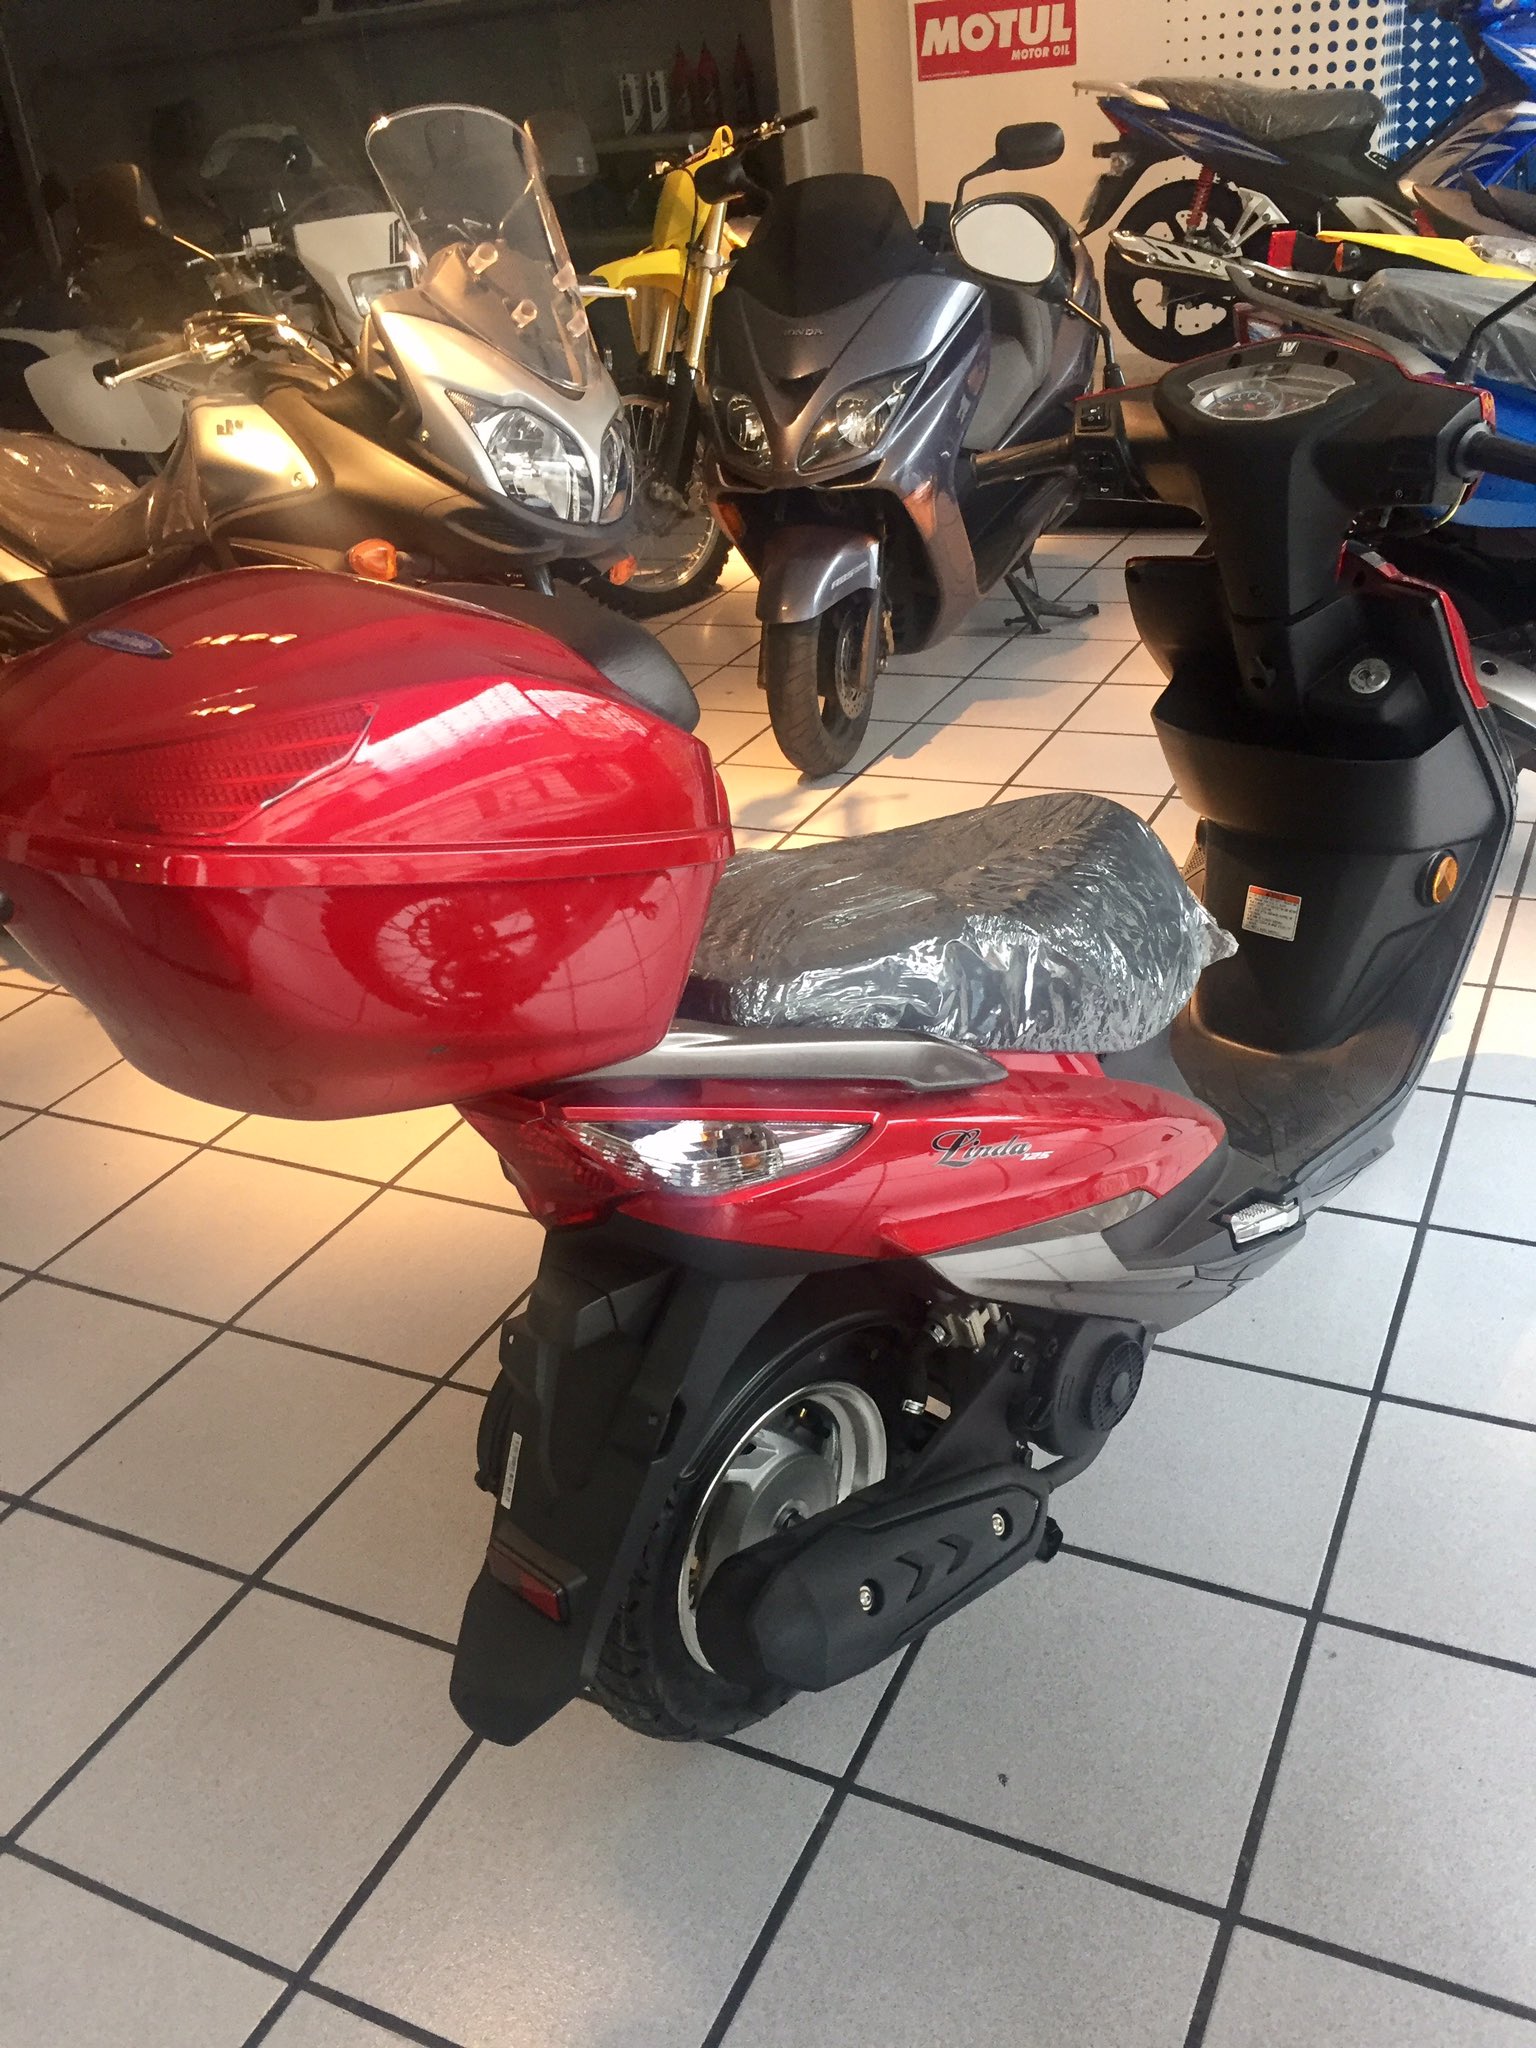 Center C.A. Twitterren: "Disponible scooter 125cc Haojue modelo linda info 2857779 #scooter #haojue #moto https://t.co/VbsVmBRaGd" /